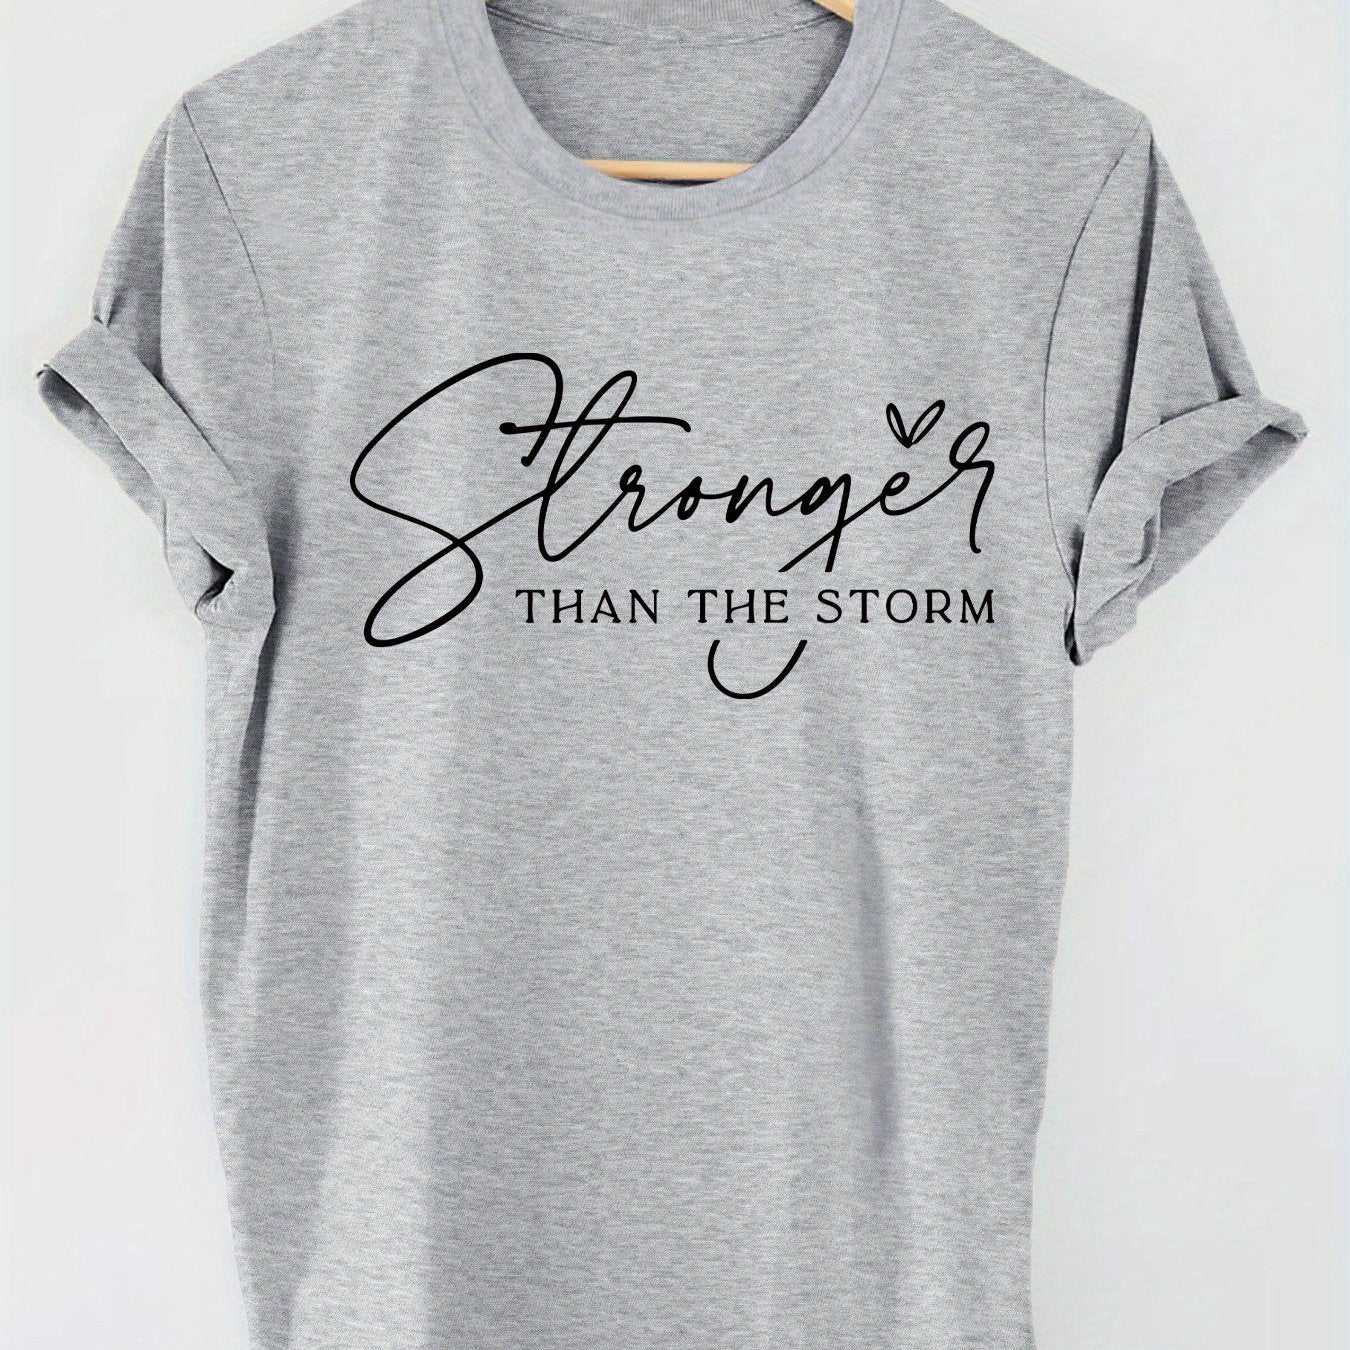 Stronger Than The Storm Women's Christian T-shirt claimedbygoddesigns